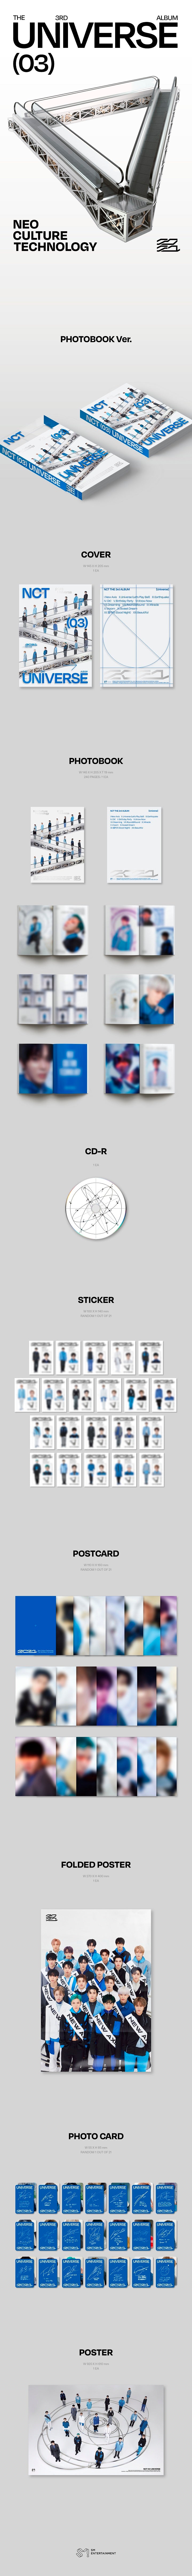 NCT - Universe (3rd Album) (Photobook Ver.)